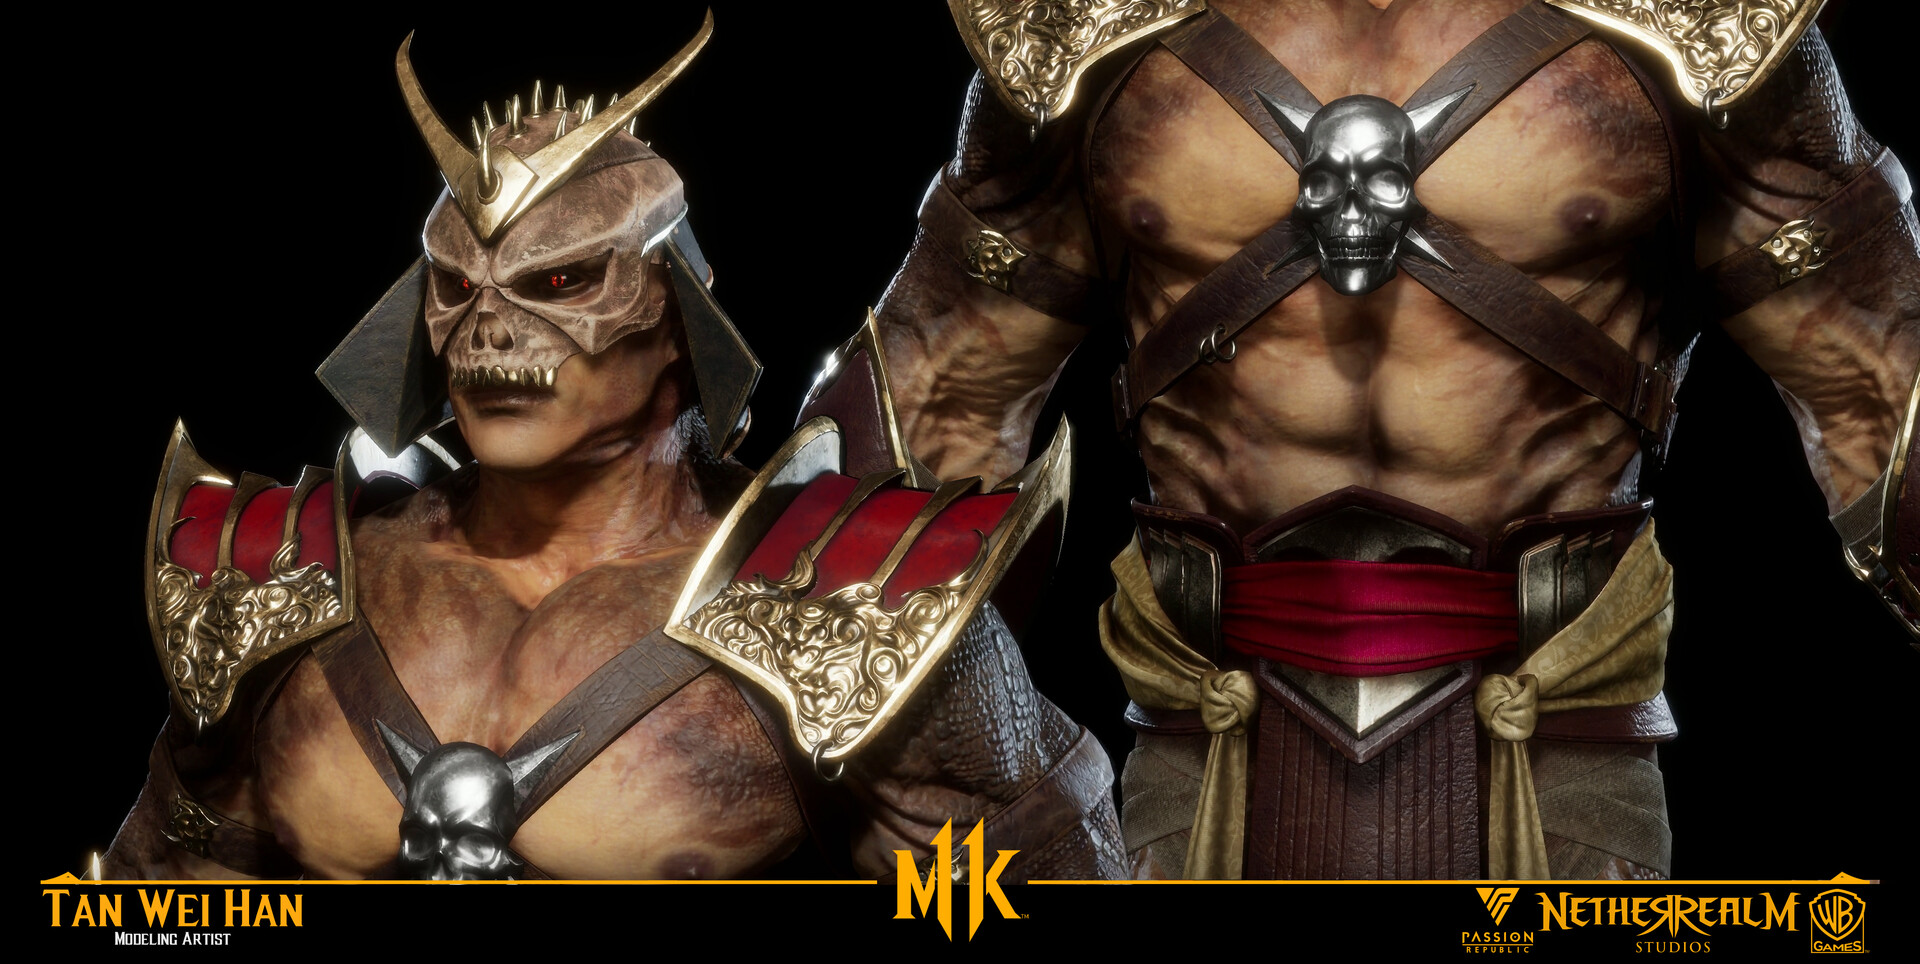 ArtStation - Commission: 3D Prints of Shao Kahn's armor Mortal Kombat 11